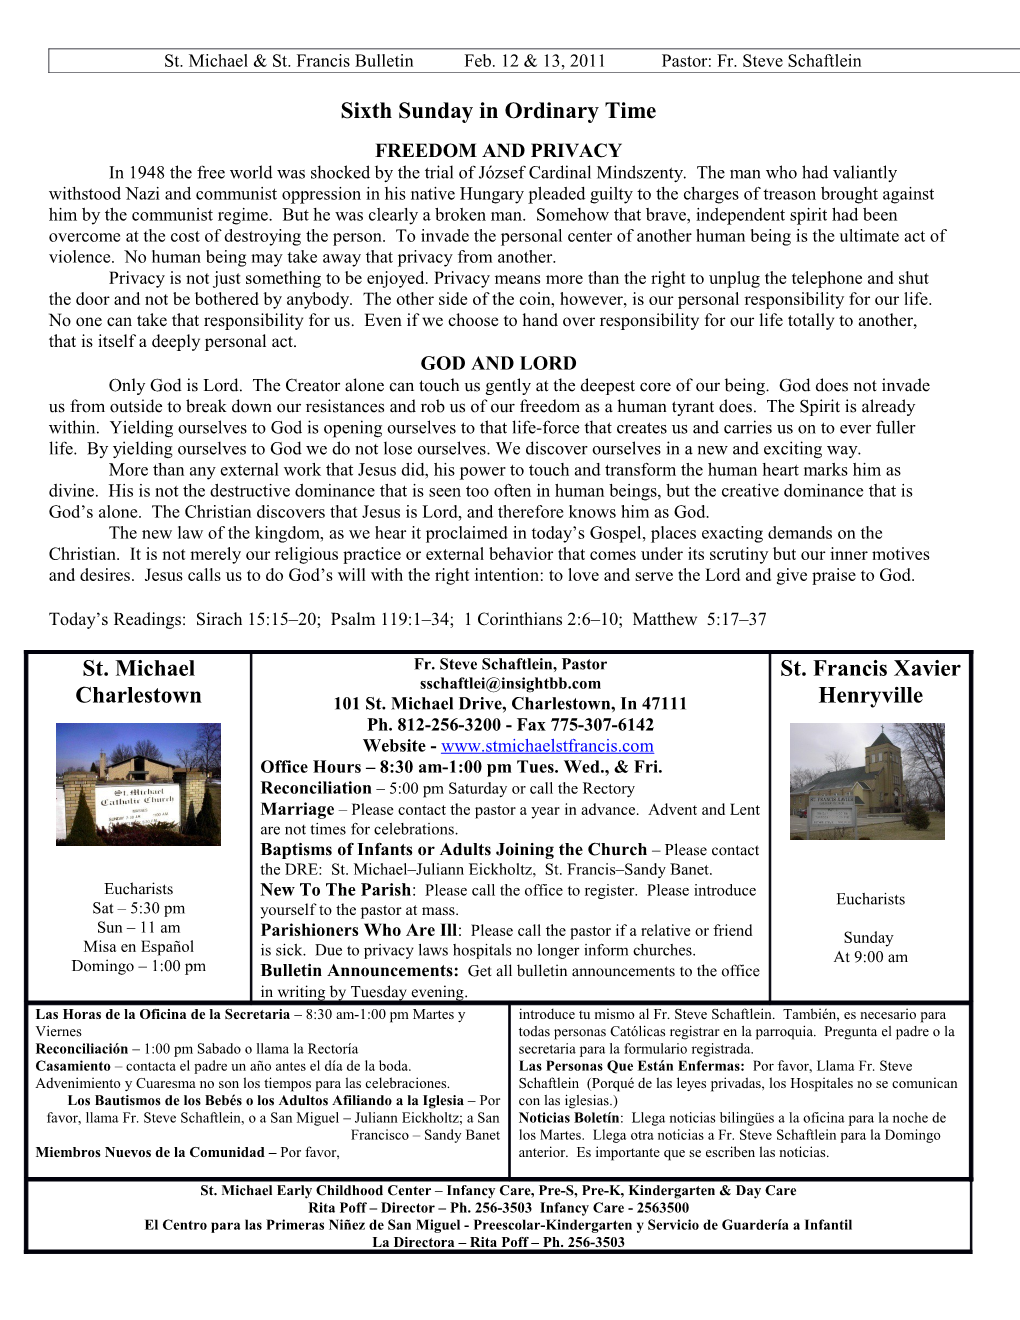 St. Michael & St. Francis Bulletin Feb. 12 & 13, 2011 Pastor: Fr. Steve Schaftlein